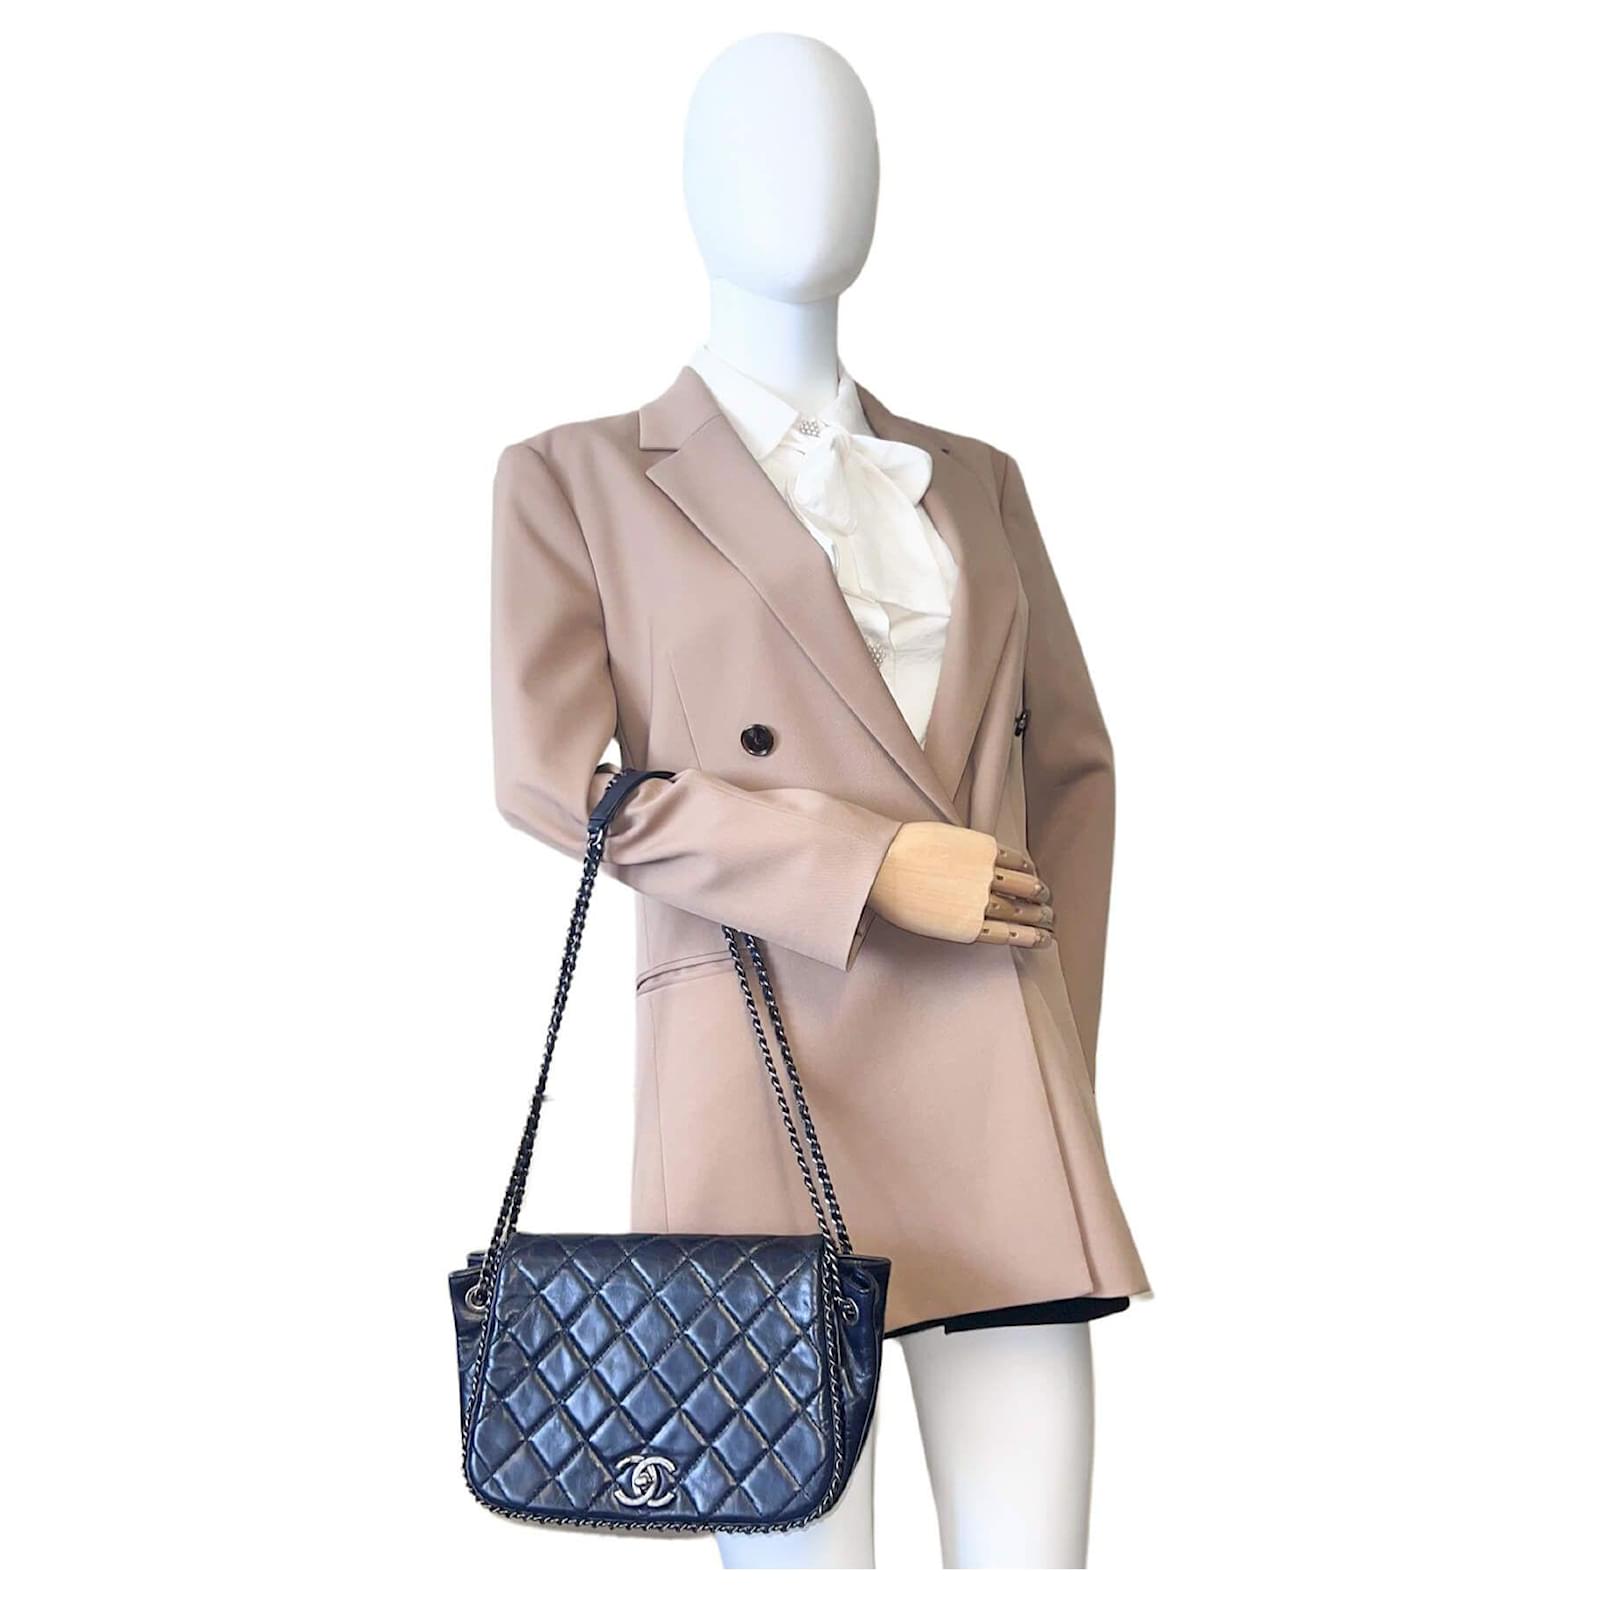 Chanel Accordion Flap Bag Navy Aged Calfskin Ruthenium Blue